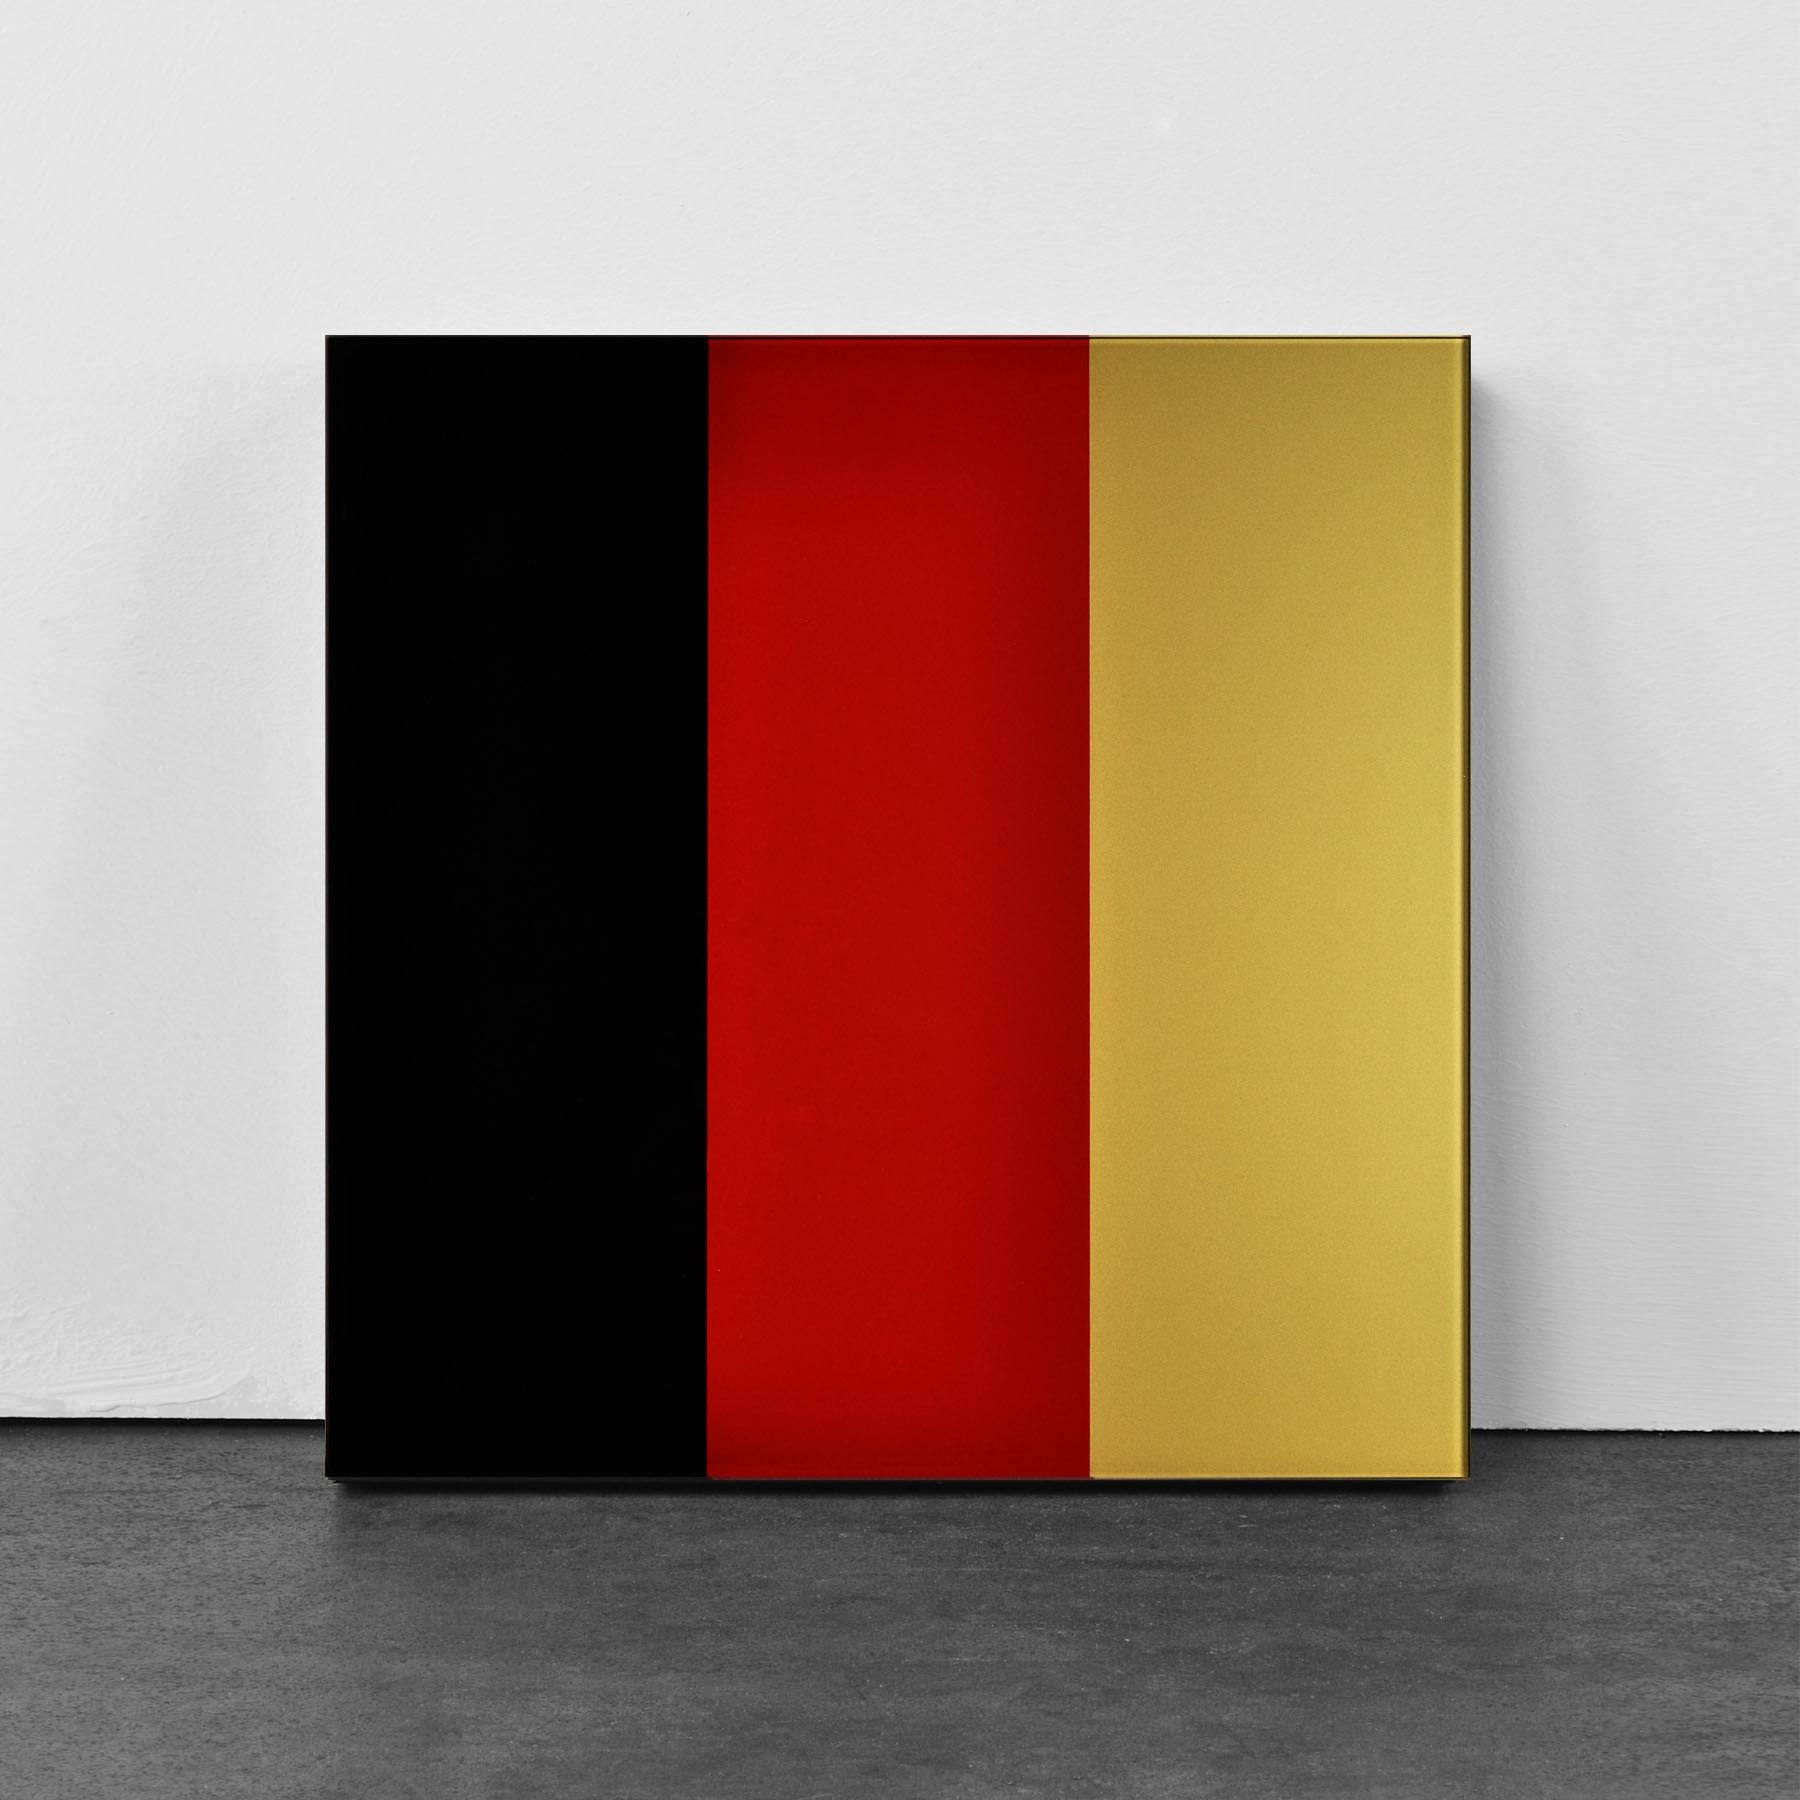 Gerhard Richter Abstract Print - Schwarz - Rot - Gold IV- Contemporary, 21st Century, Silkscreen, Limited Edition